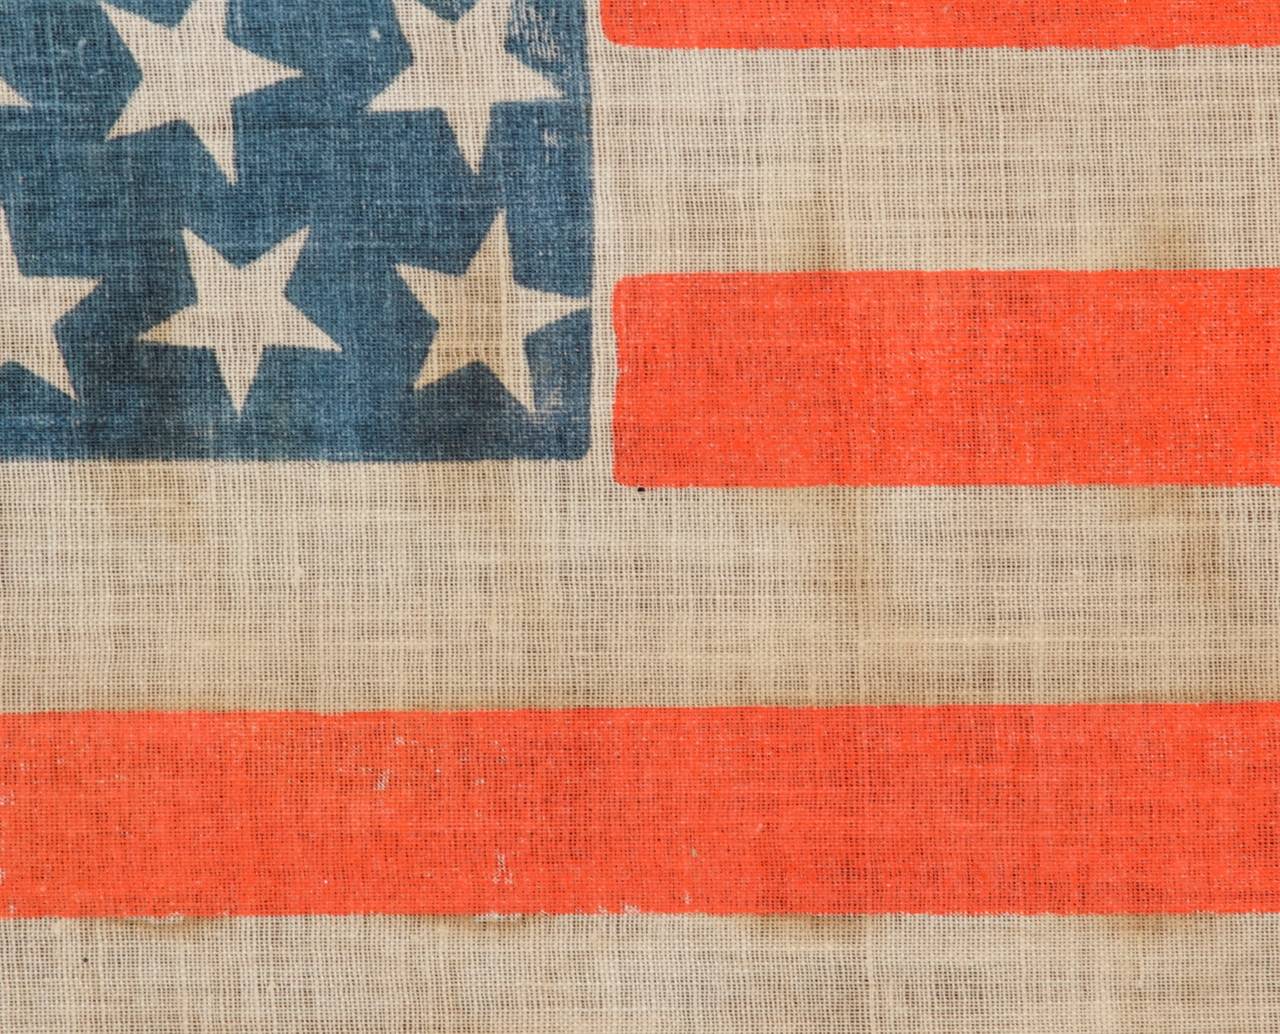 Late 19th Century 38-Star, Colorado Statehood Antique American Flag